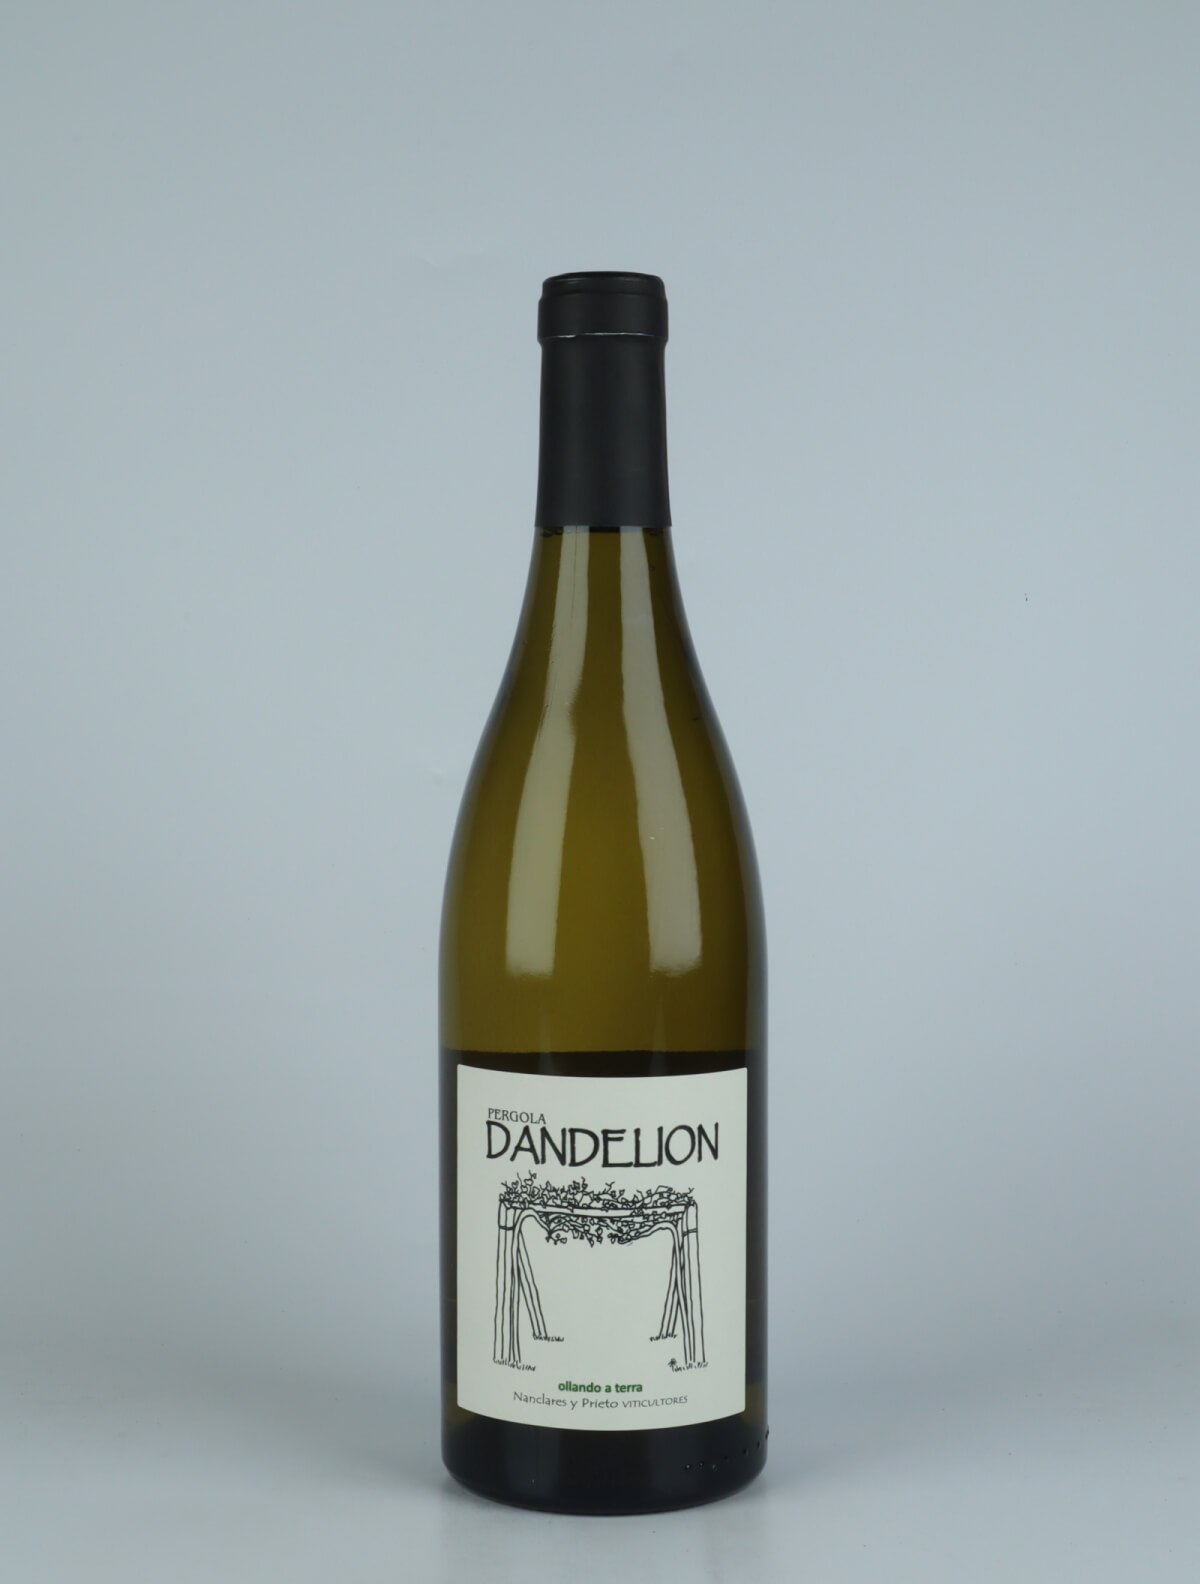 A bottle 2022 Dandelion White wine from Alberto Nanclares, Rias Baixas in Spain